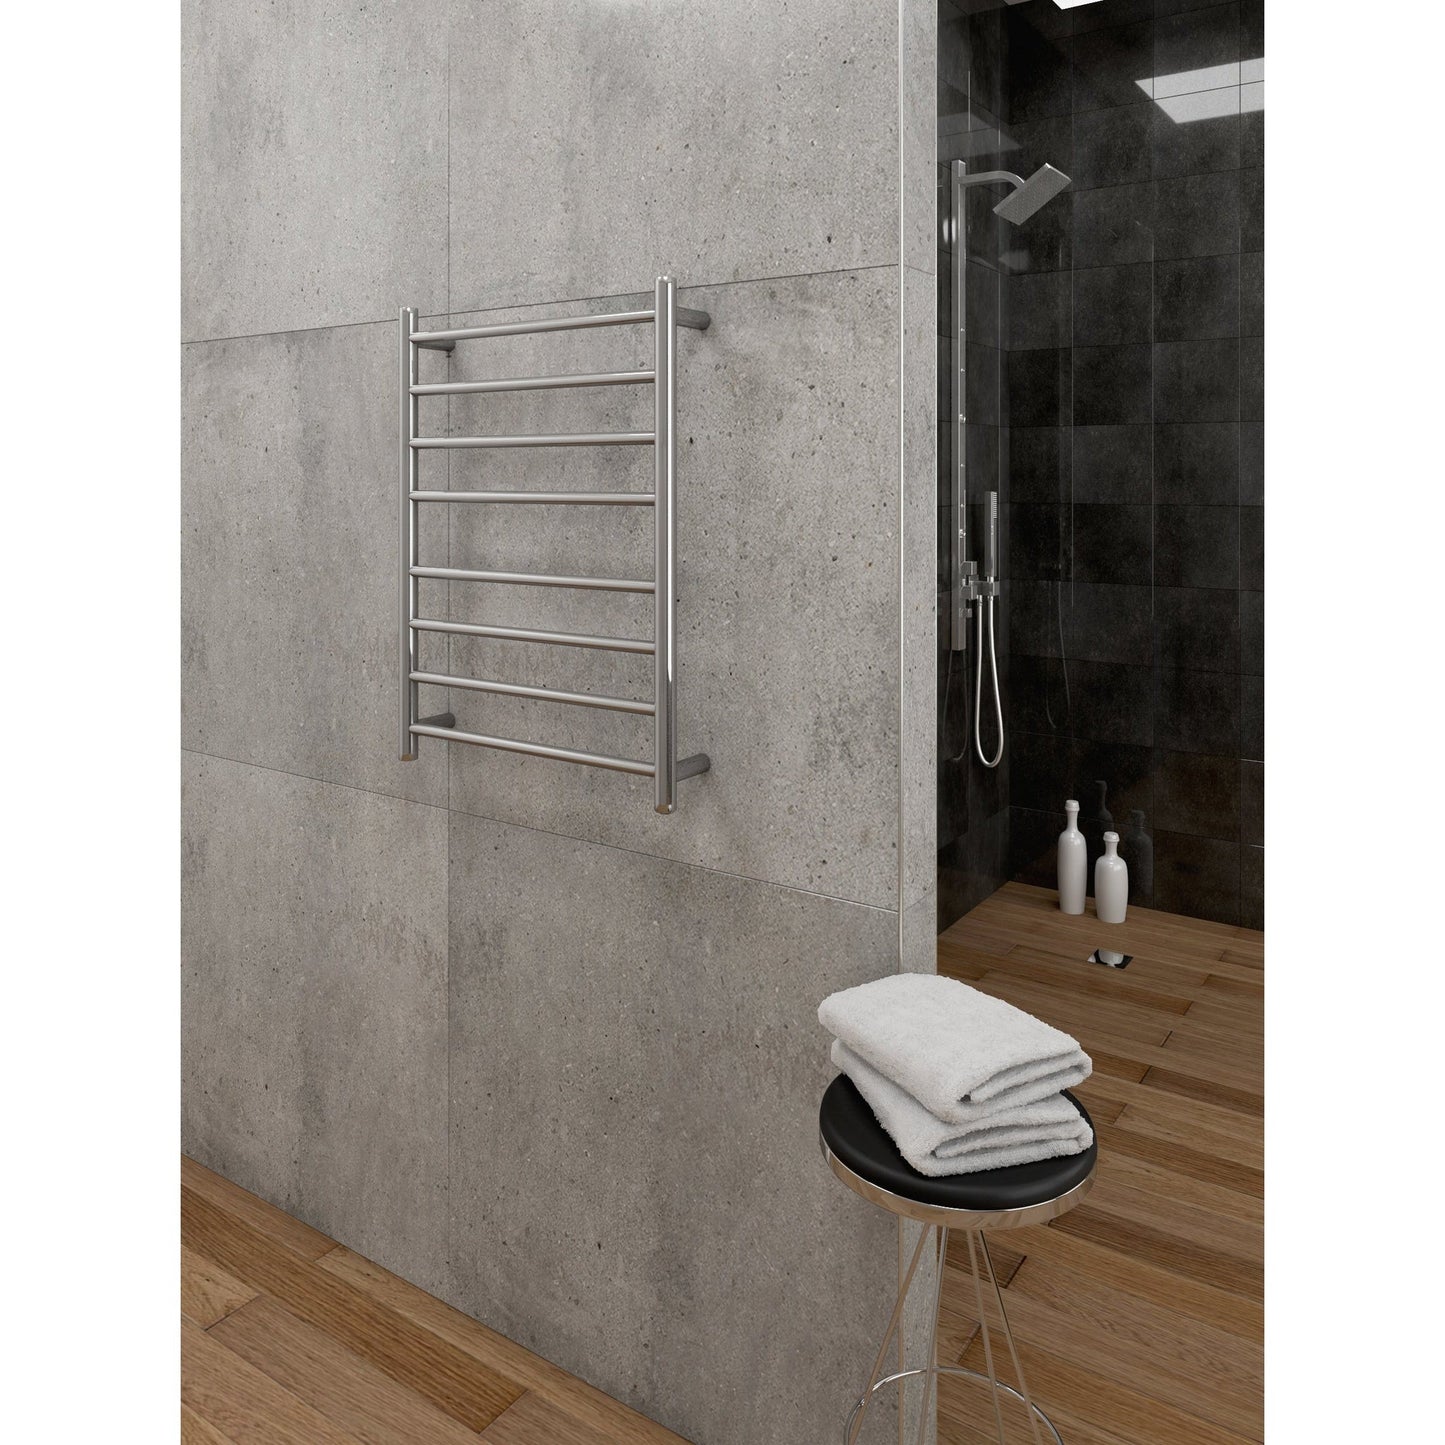 Cozy in Paris Tyche 21" x 28" 65 W 200 BTU Chrome Electric Heating Wall-Mounted Towel Warmer